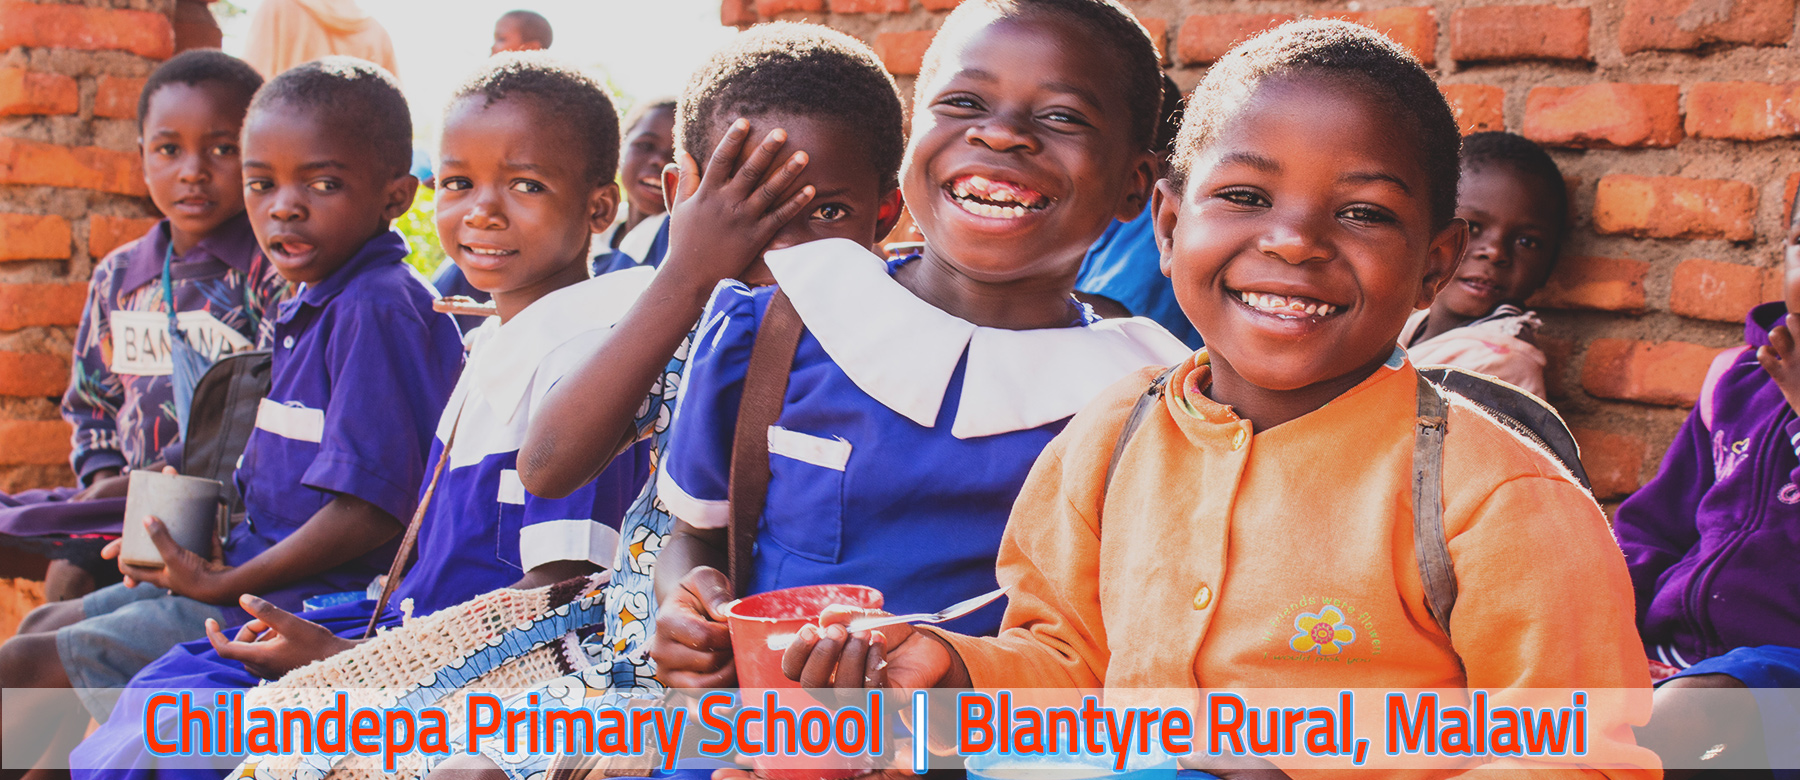 Chilandepa Primary School, Blantyre Rural | Malawi